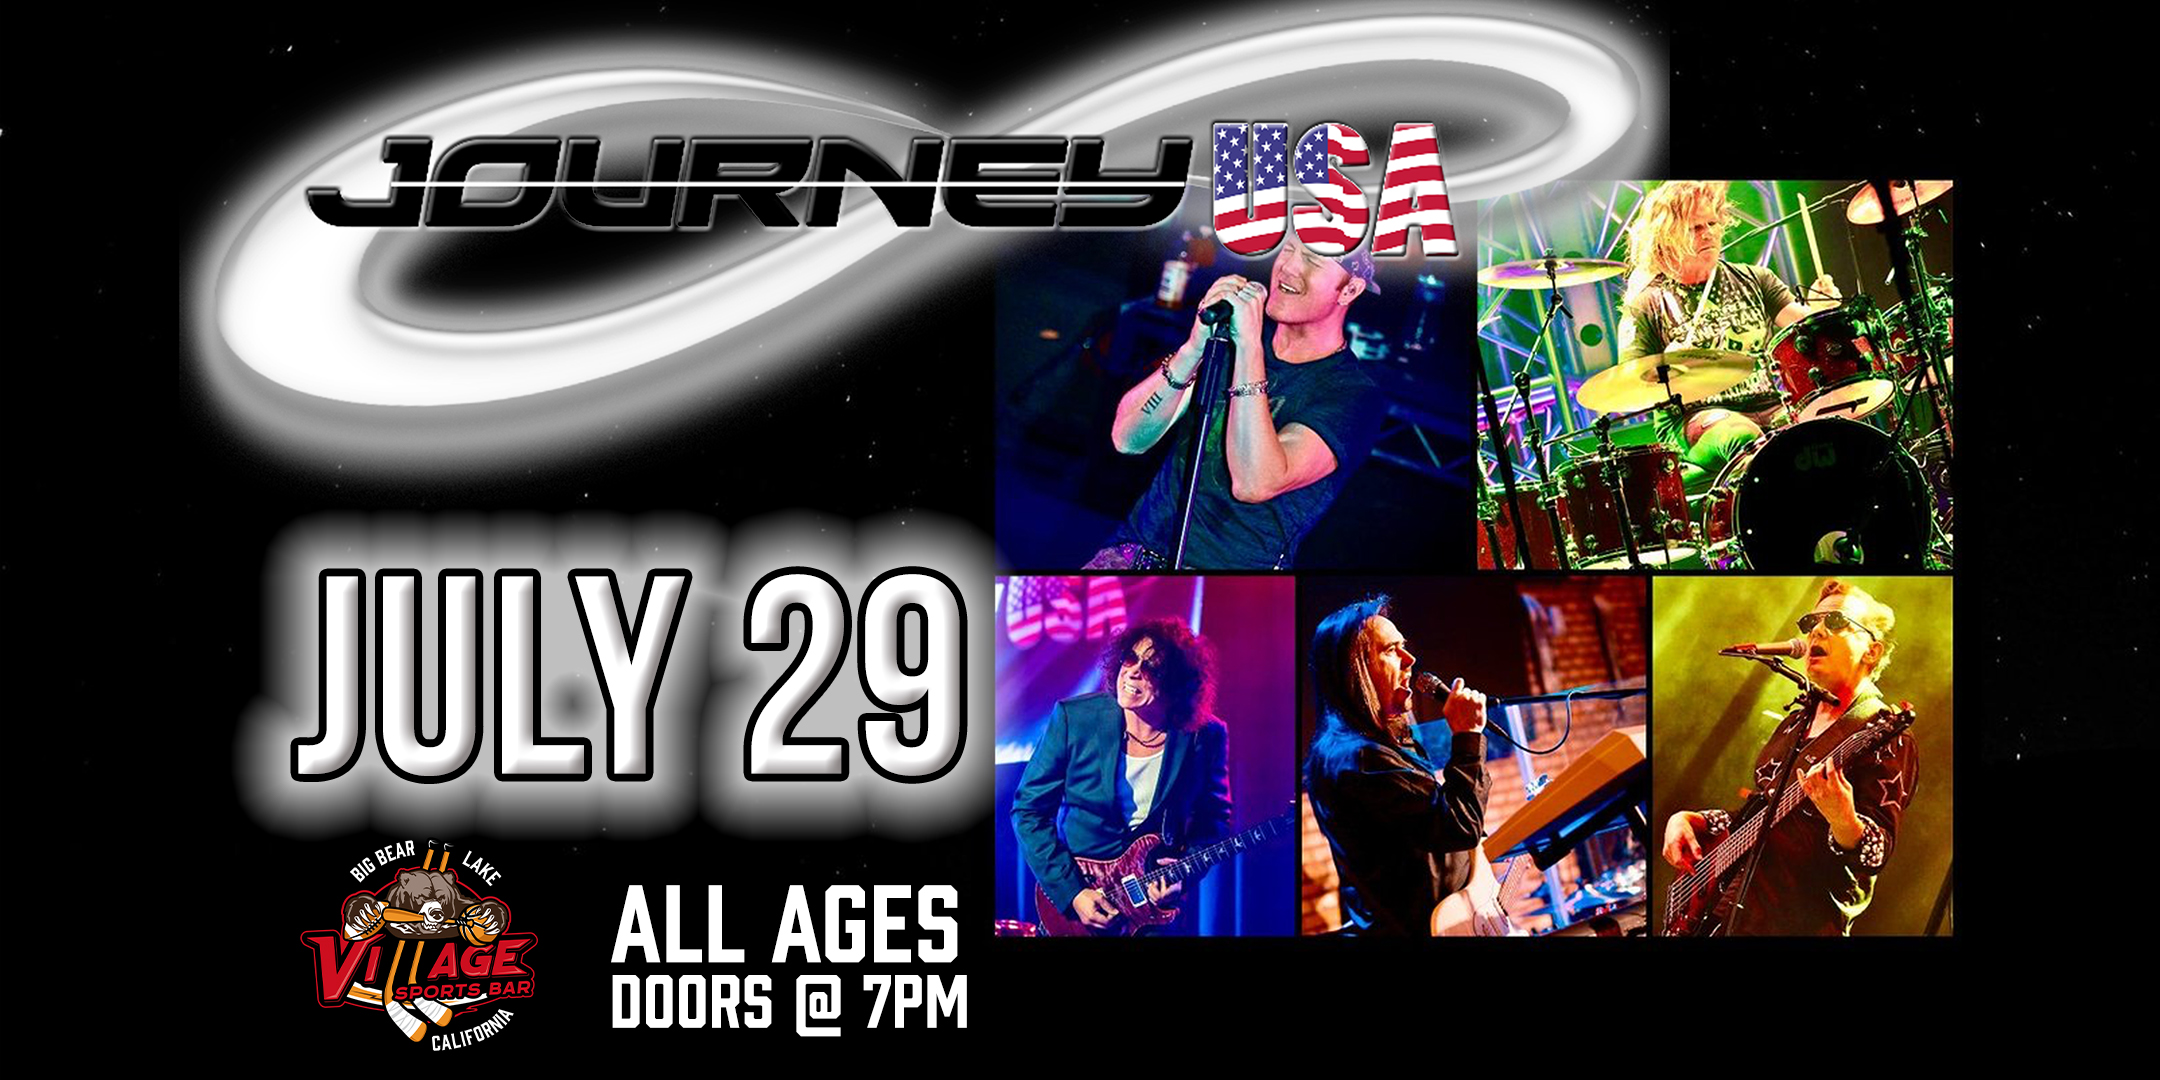 Village Sports Bar Presents: Journey USA - Tribute to Journey